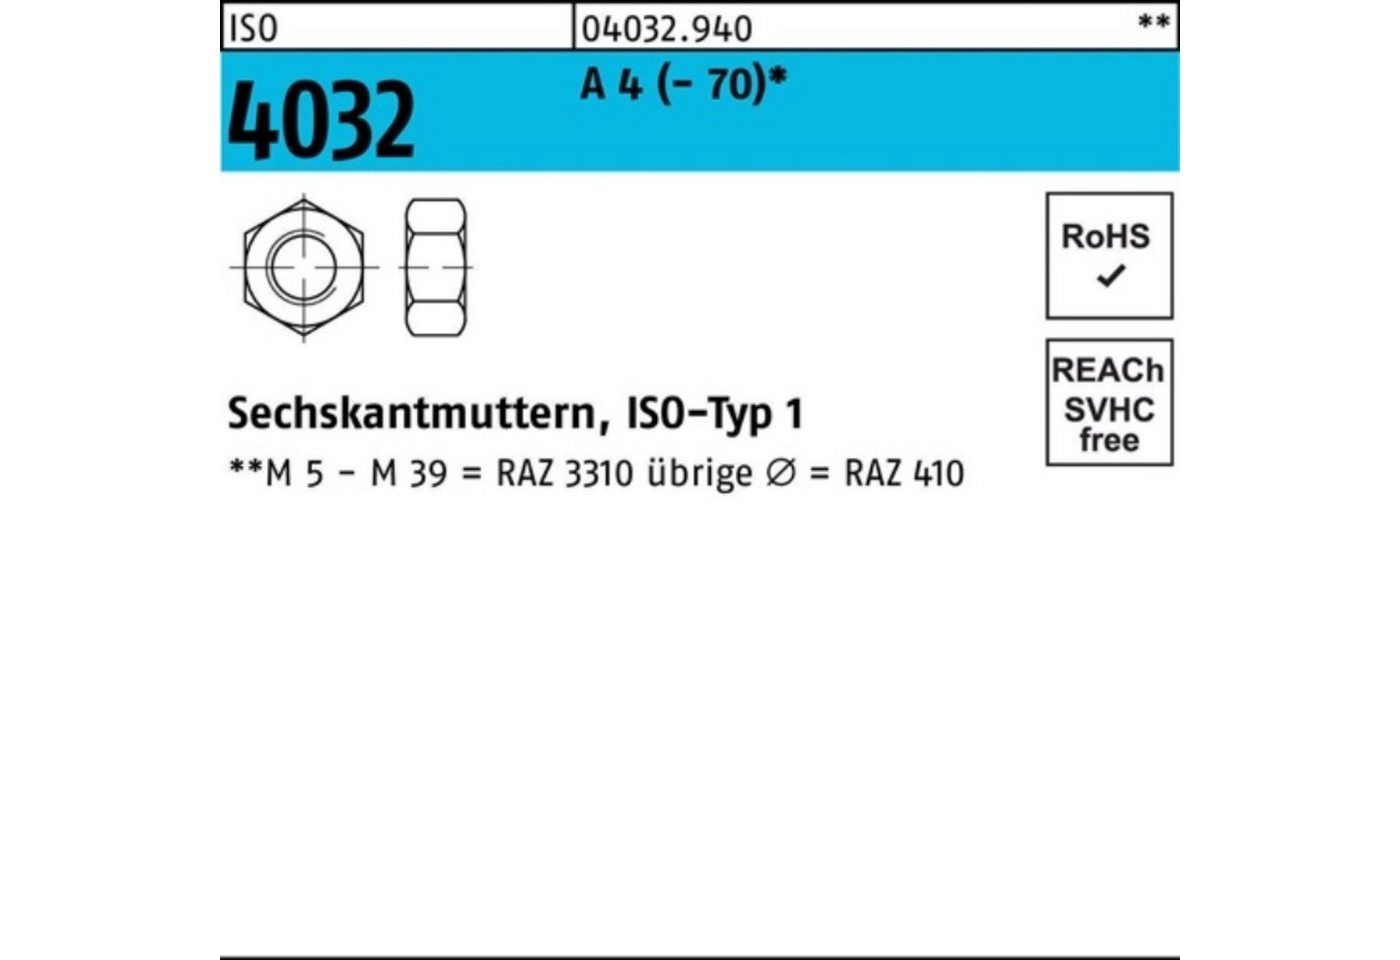 Bufab Muttern 1000er Pack Sechskantmutter ISO 4032 M6 A 4 (70) 1000 Stück ISO 403 von Bufab